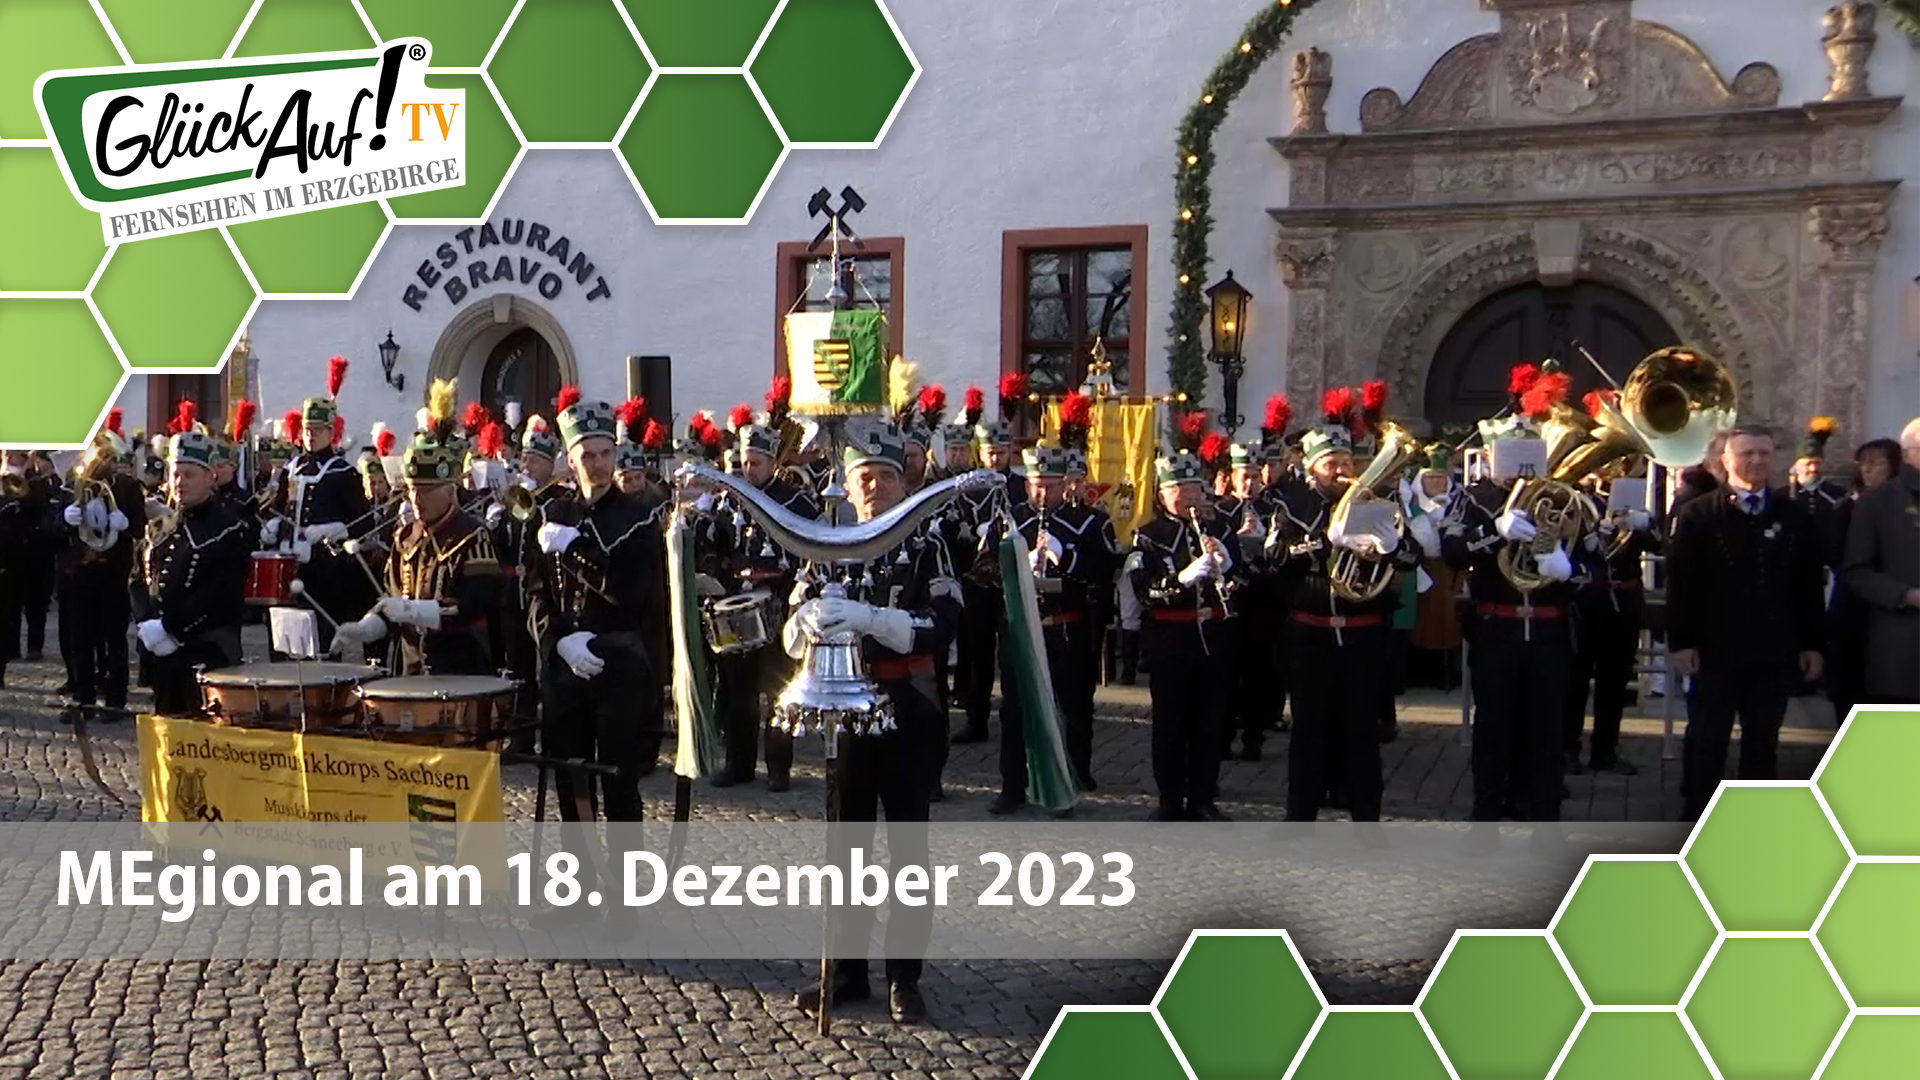 MEgional am 18. Dezember 2023 mit der Bergparade in Marienberg